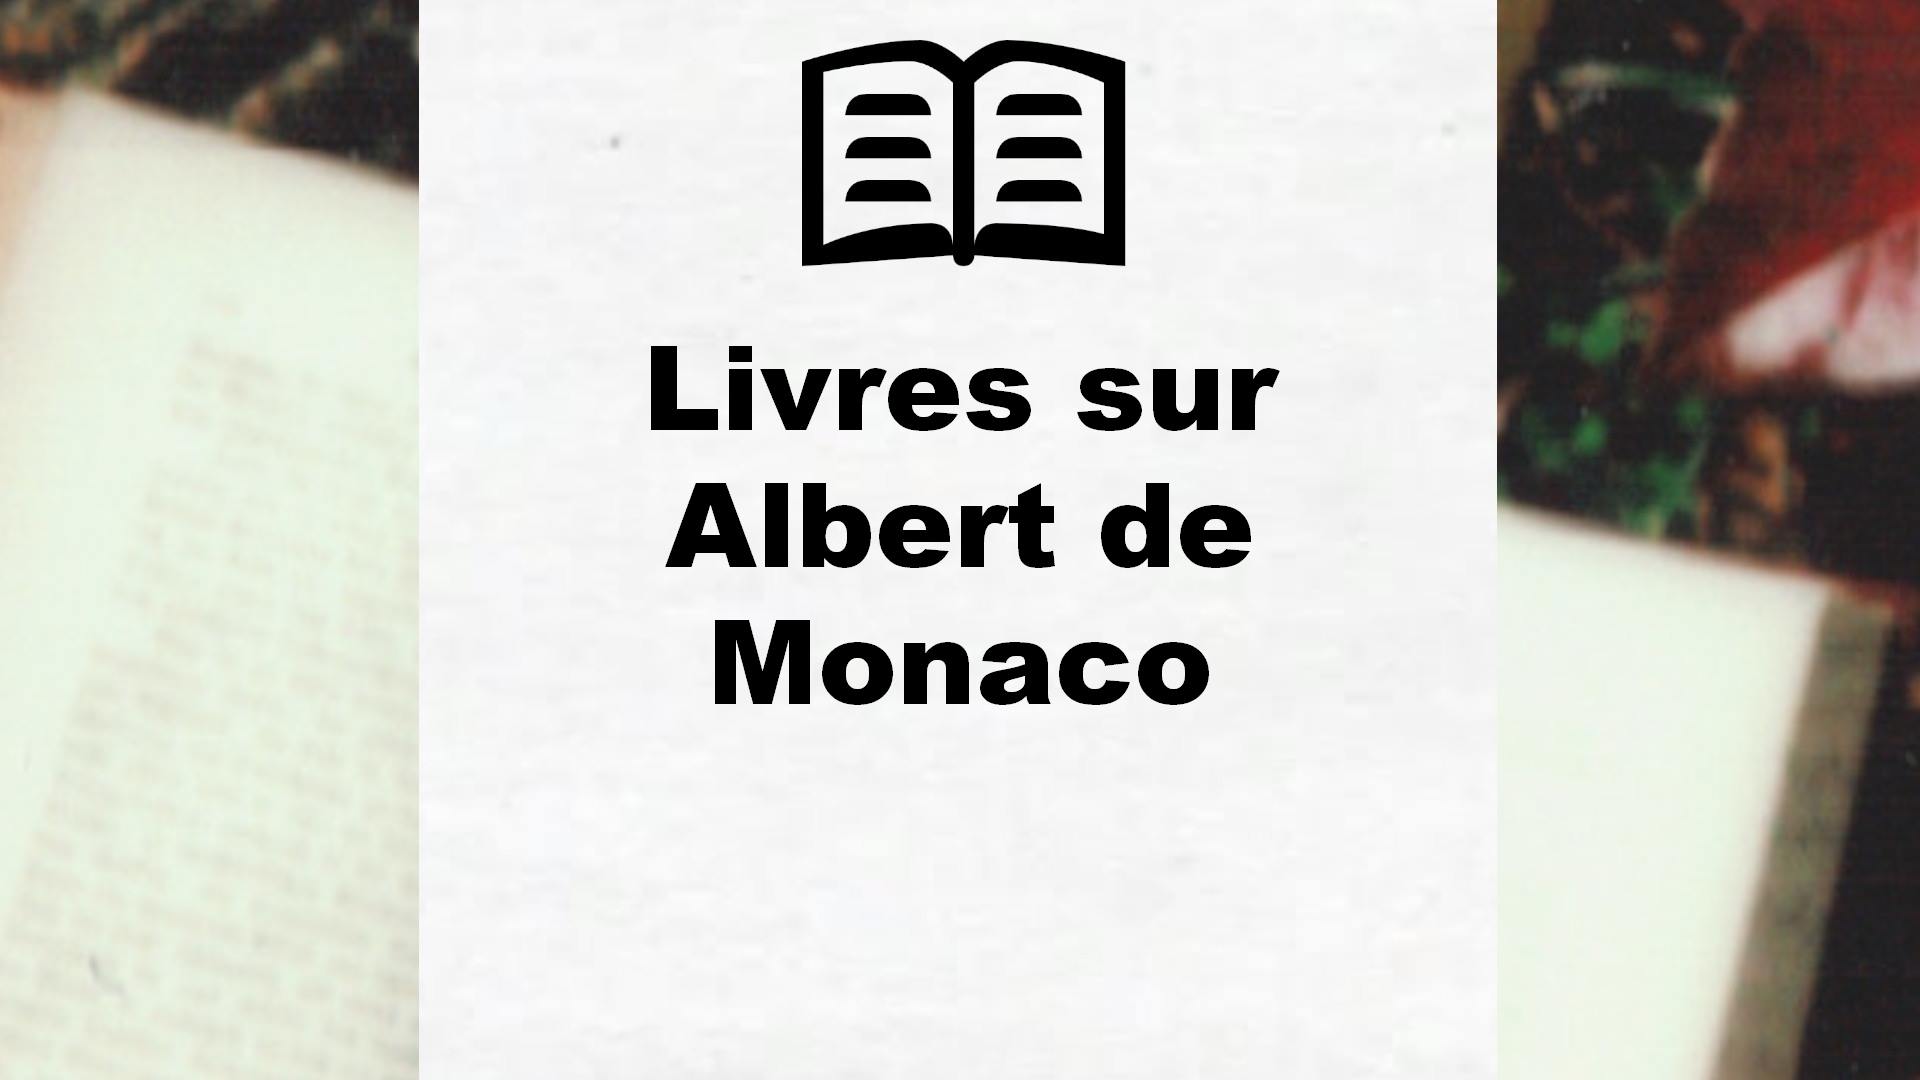 Livres sur Albert de Monaco